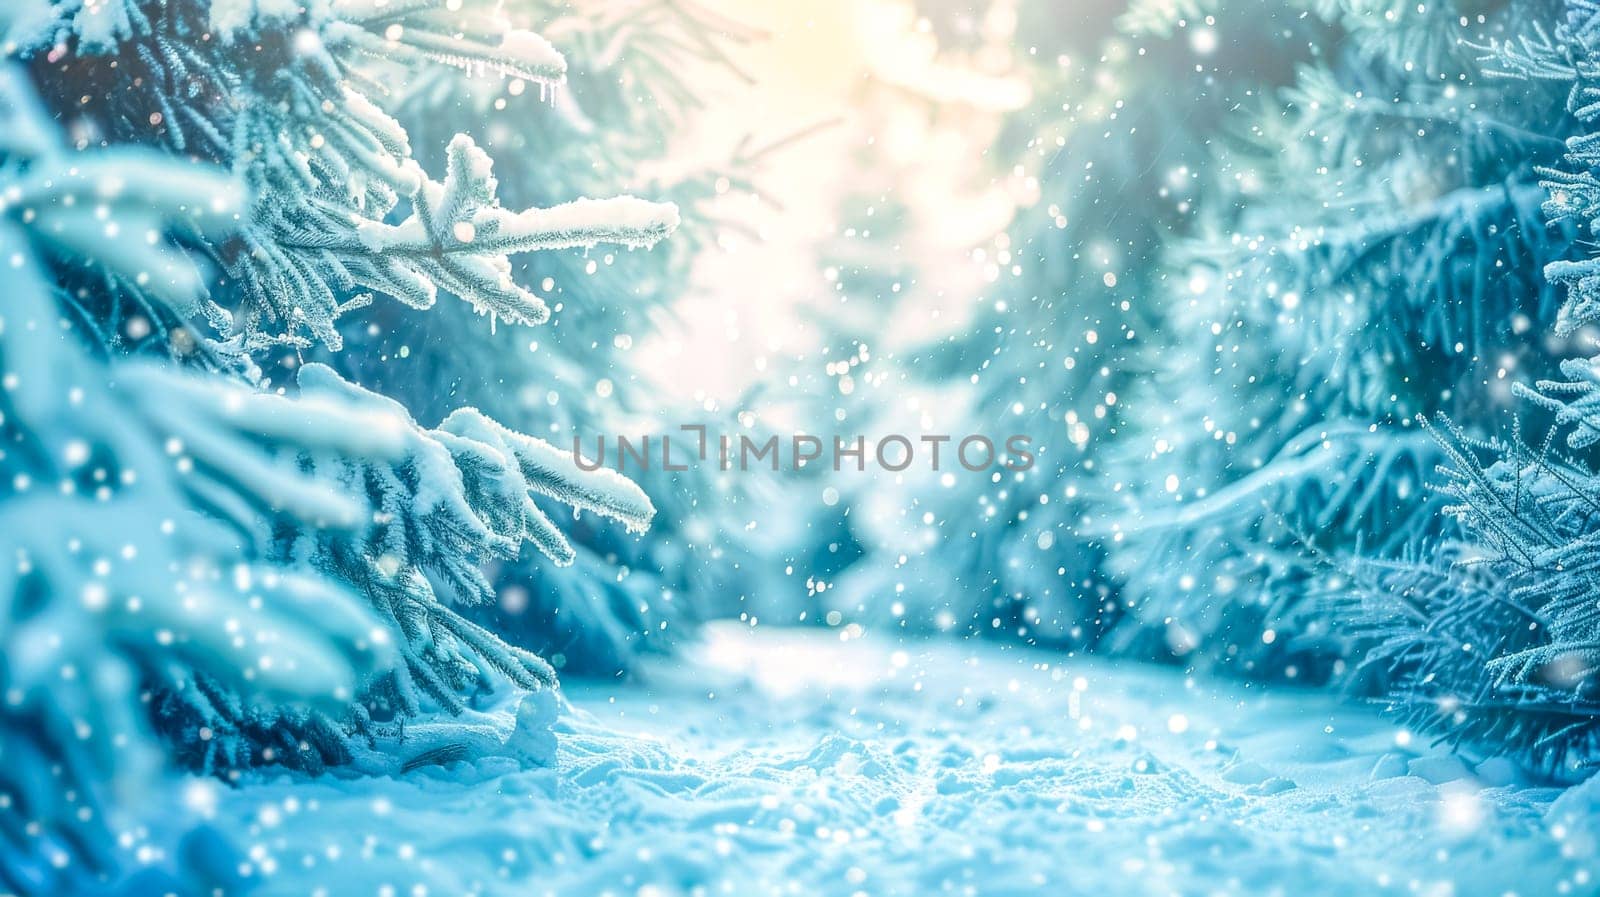 Winter wonderland: snow-covered pine trees by Edophoto